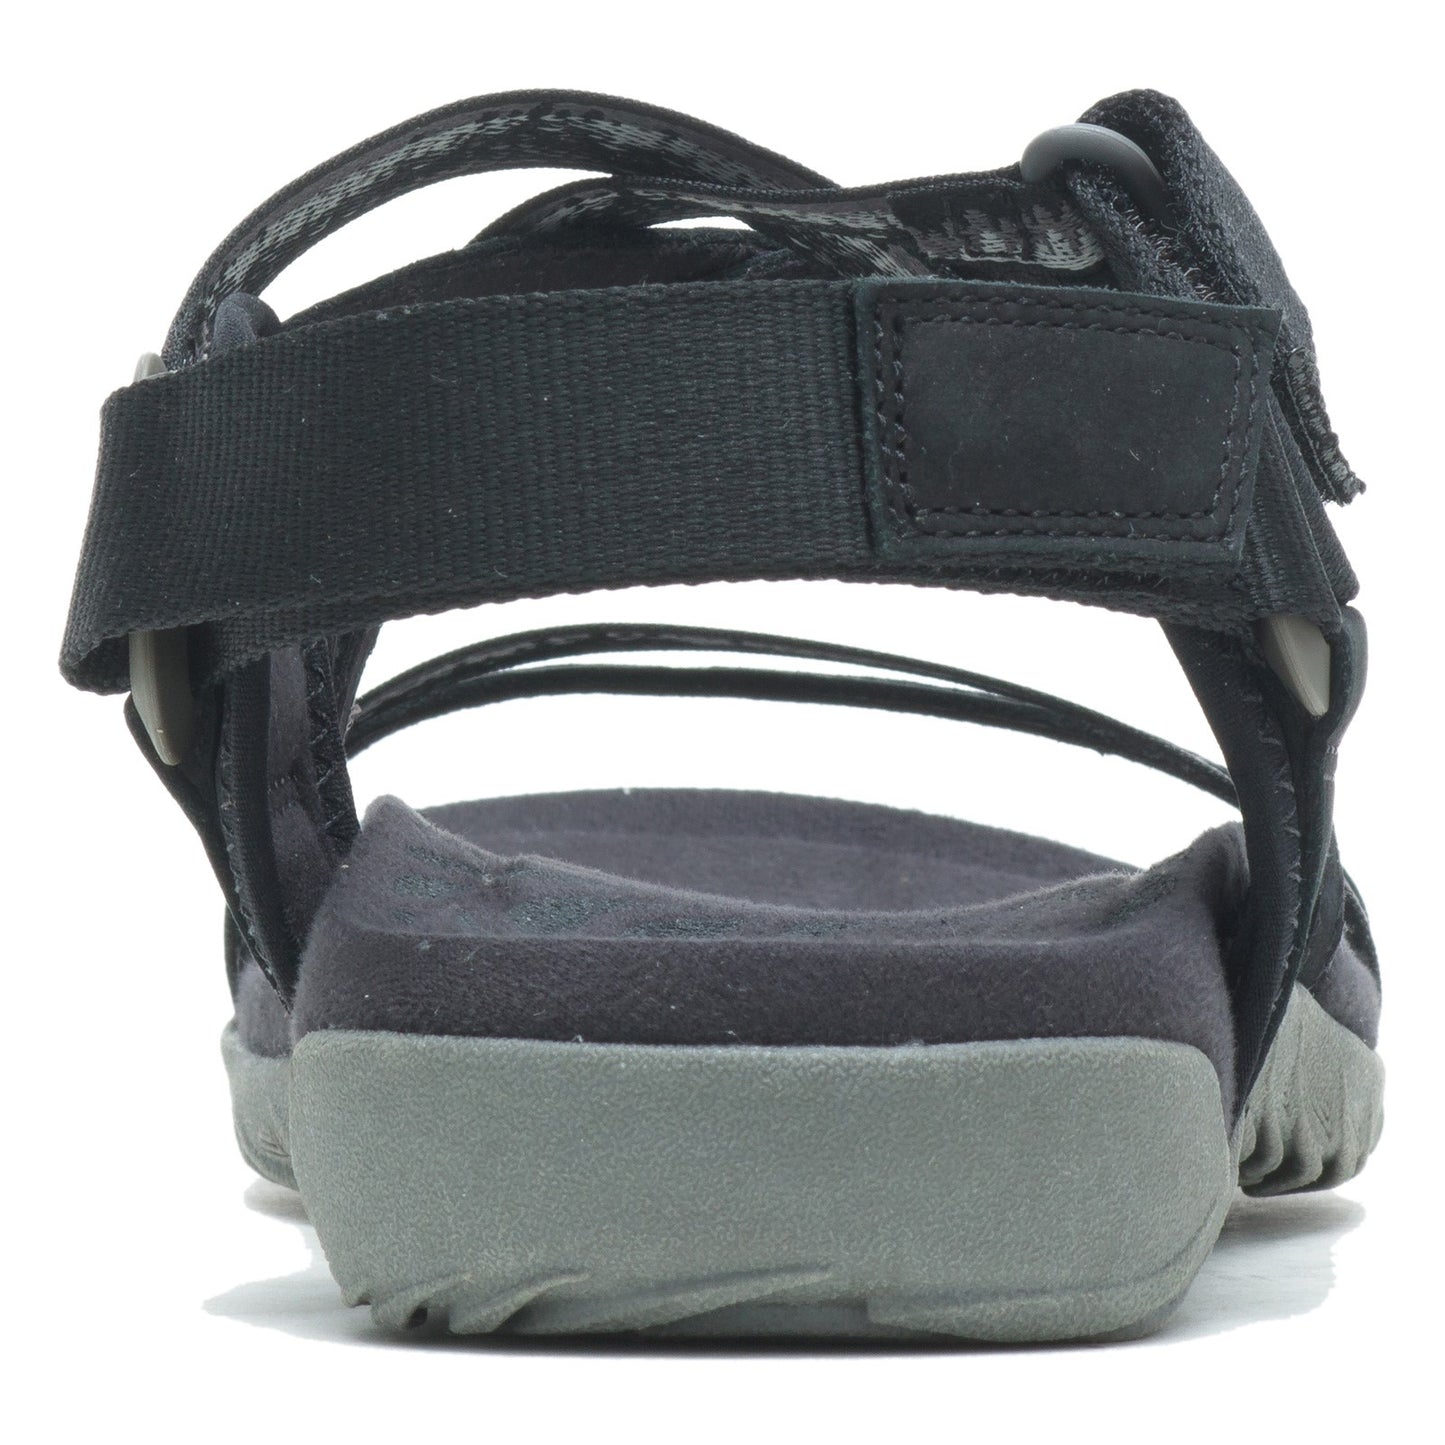 Peltz Shoes  Women's Merrell Terran Cush 3 Lattice Sandal BLACK J002712